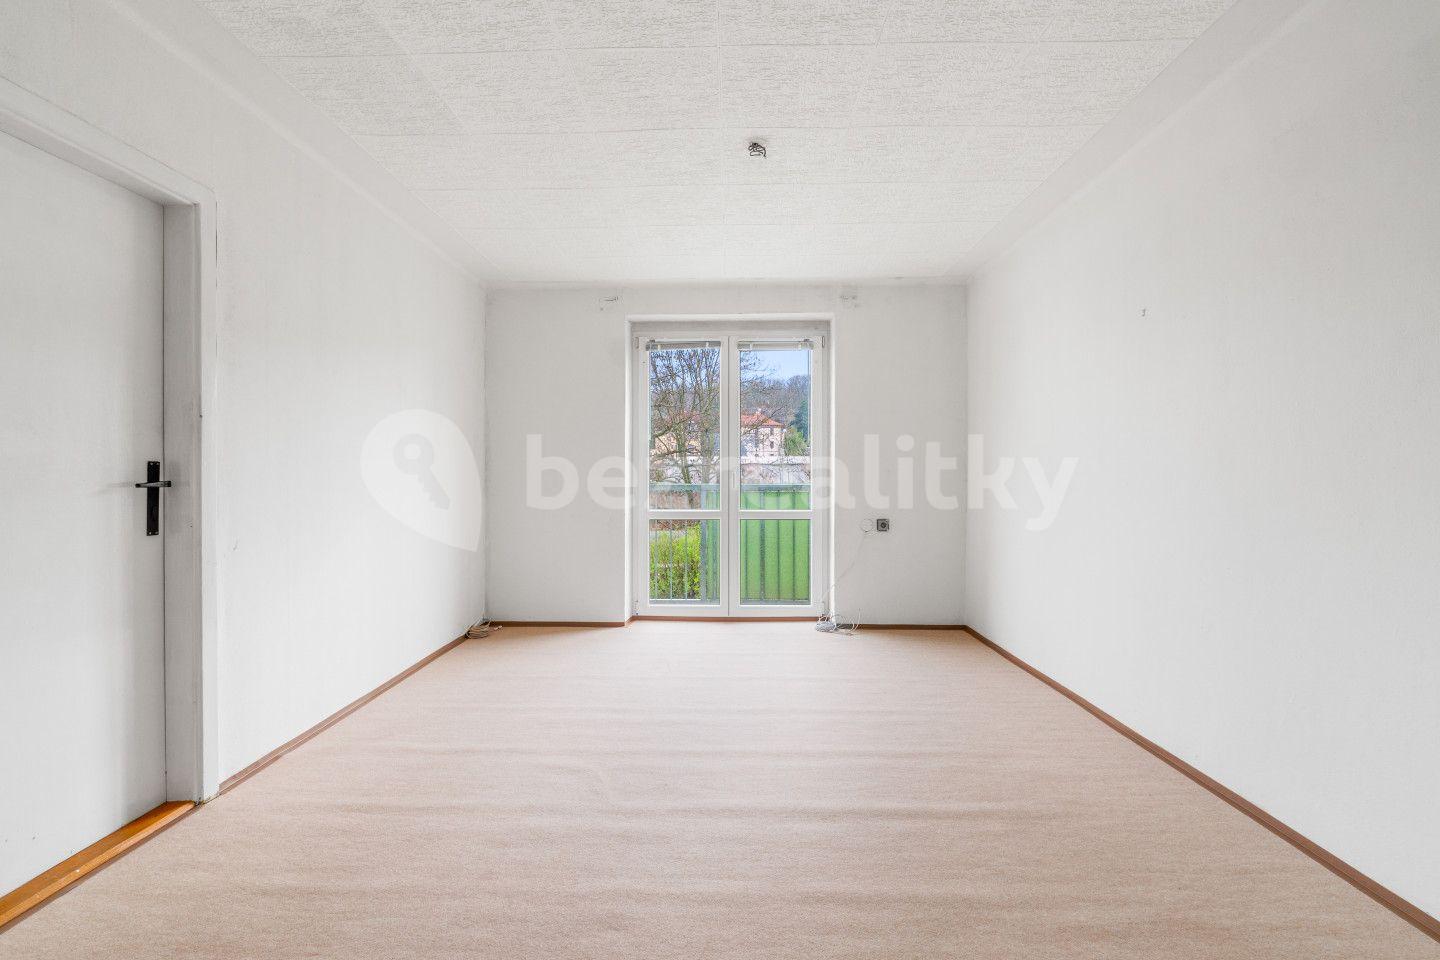 2 bedroom flat for sale, 44 m², Americká, Teplice, Ústecký Region